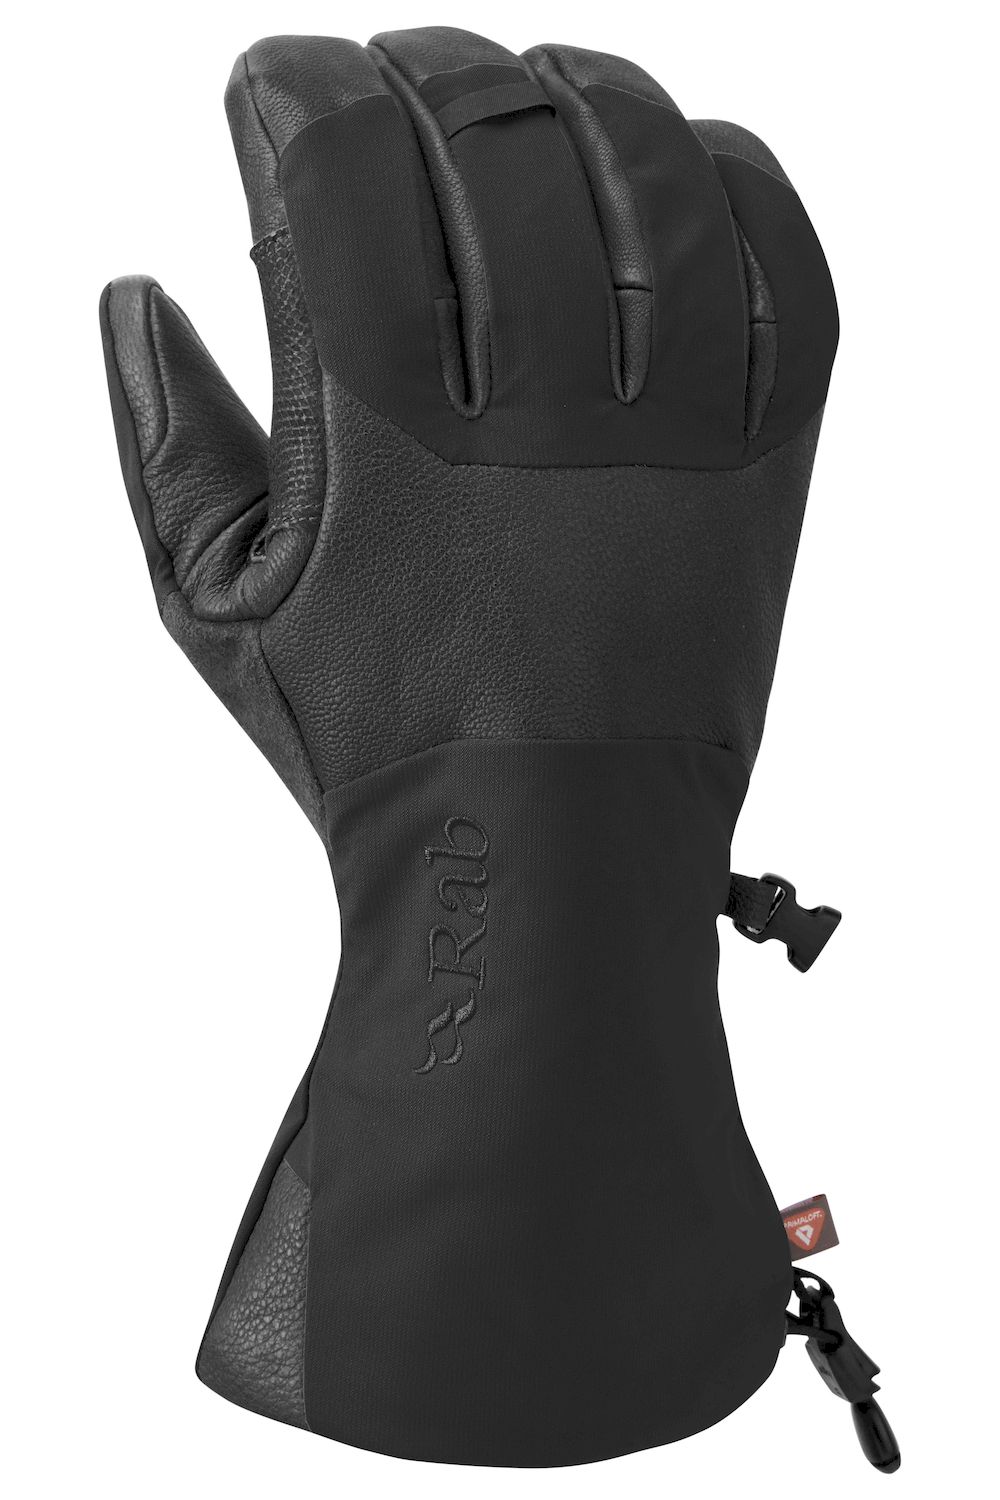 Rab Guide 2 GTX Gloves - Gants alpinisme | Hardloop